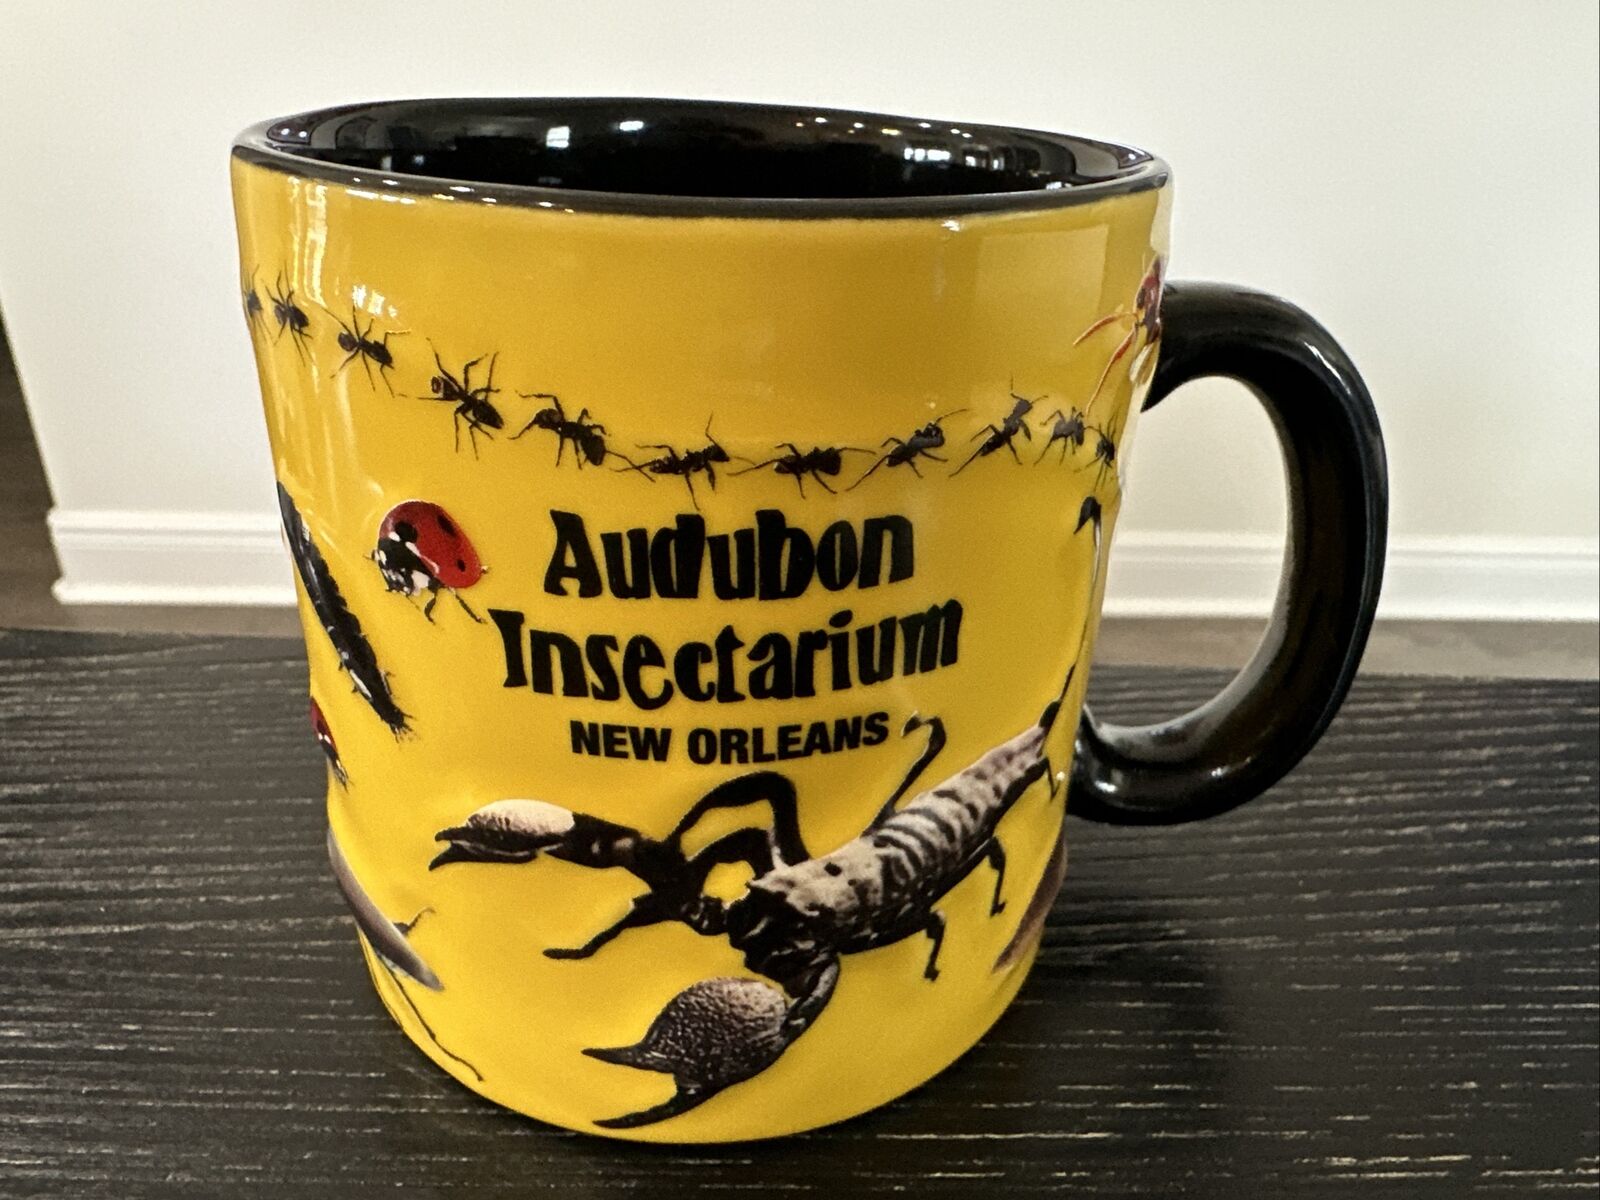 Audubon Insectarium New Orleans, 16 oz Mug, Bugs & Insects, Unused, Pristine